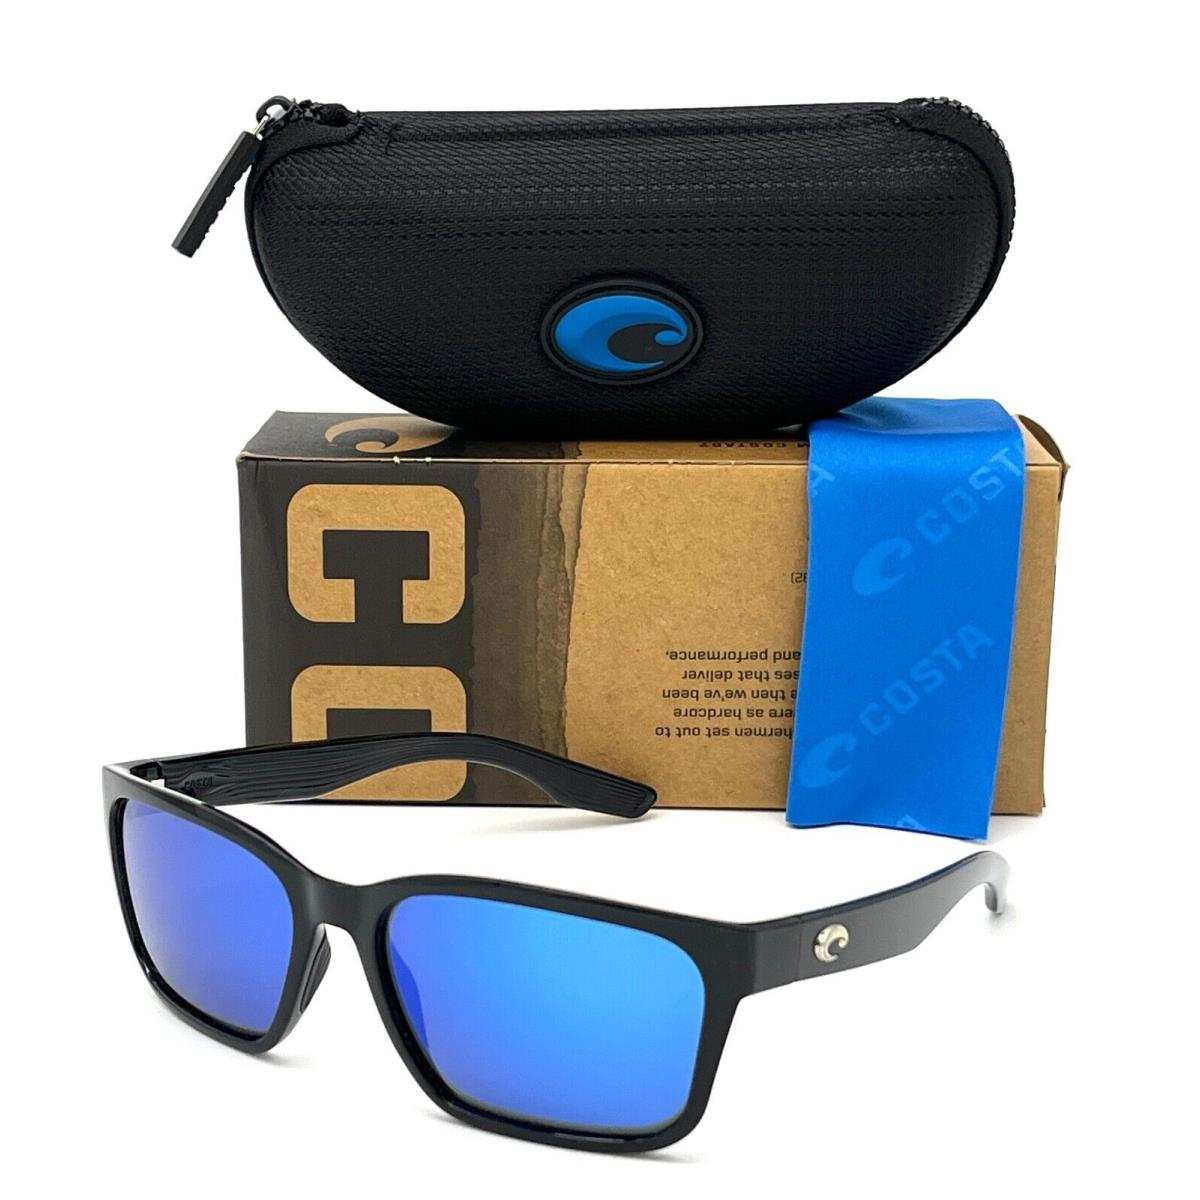 Costa Del Mar Palmas Black / Blue Mirror 580G 57mm Polarized Sunglasses - Frame: Black, Lens: Blue